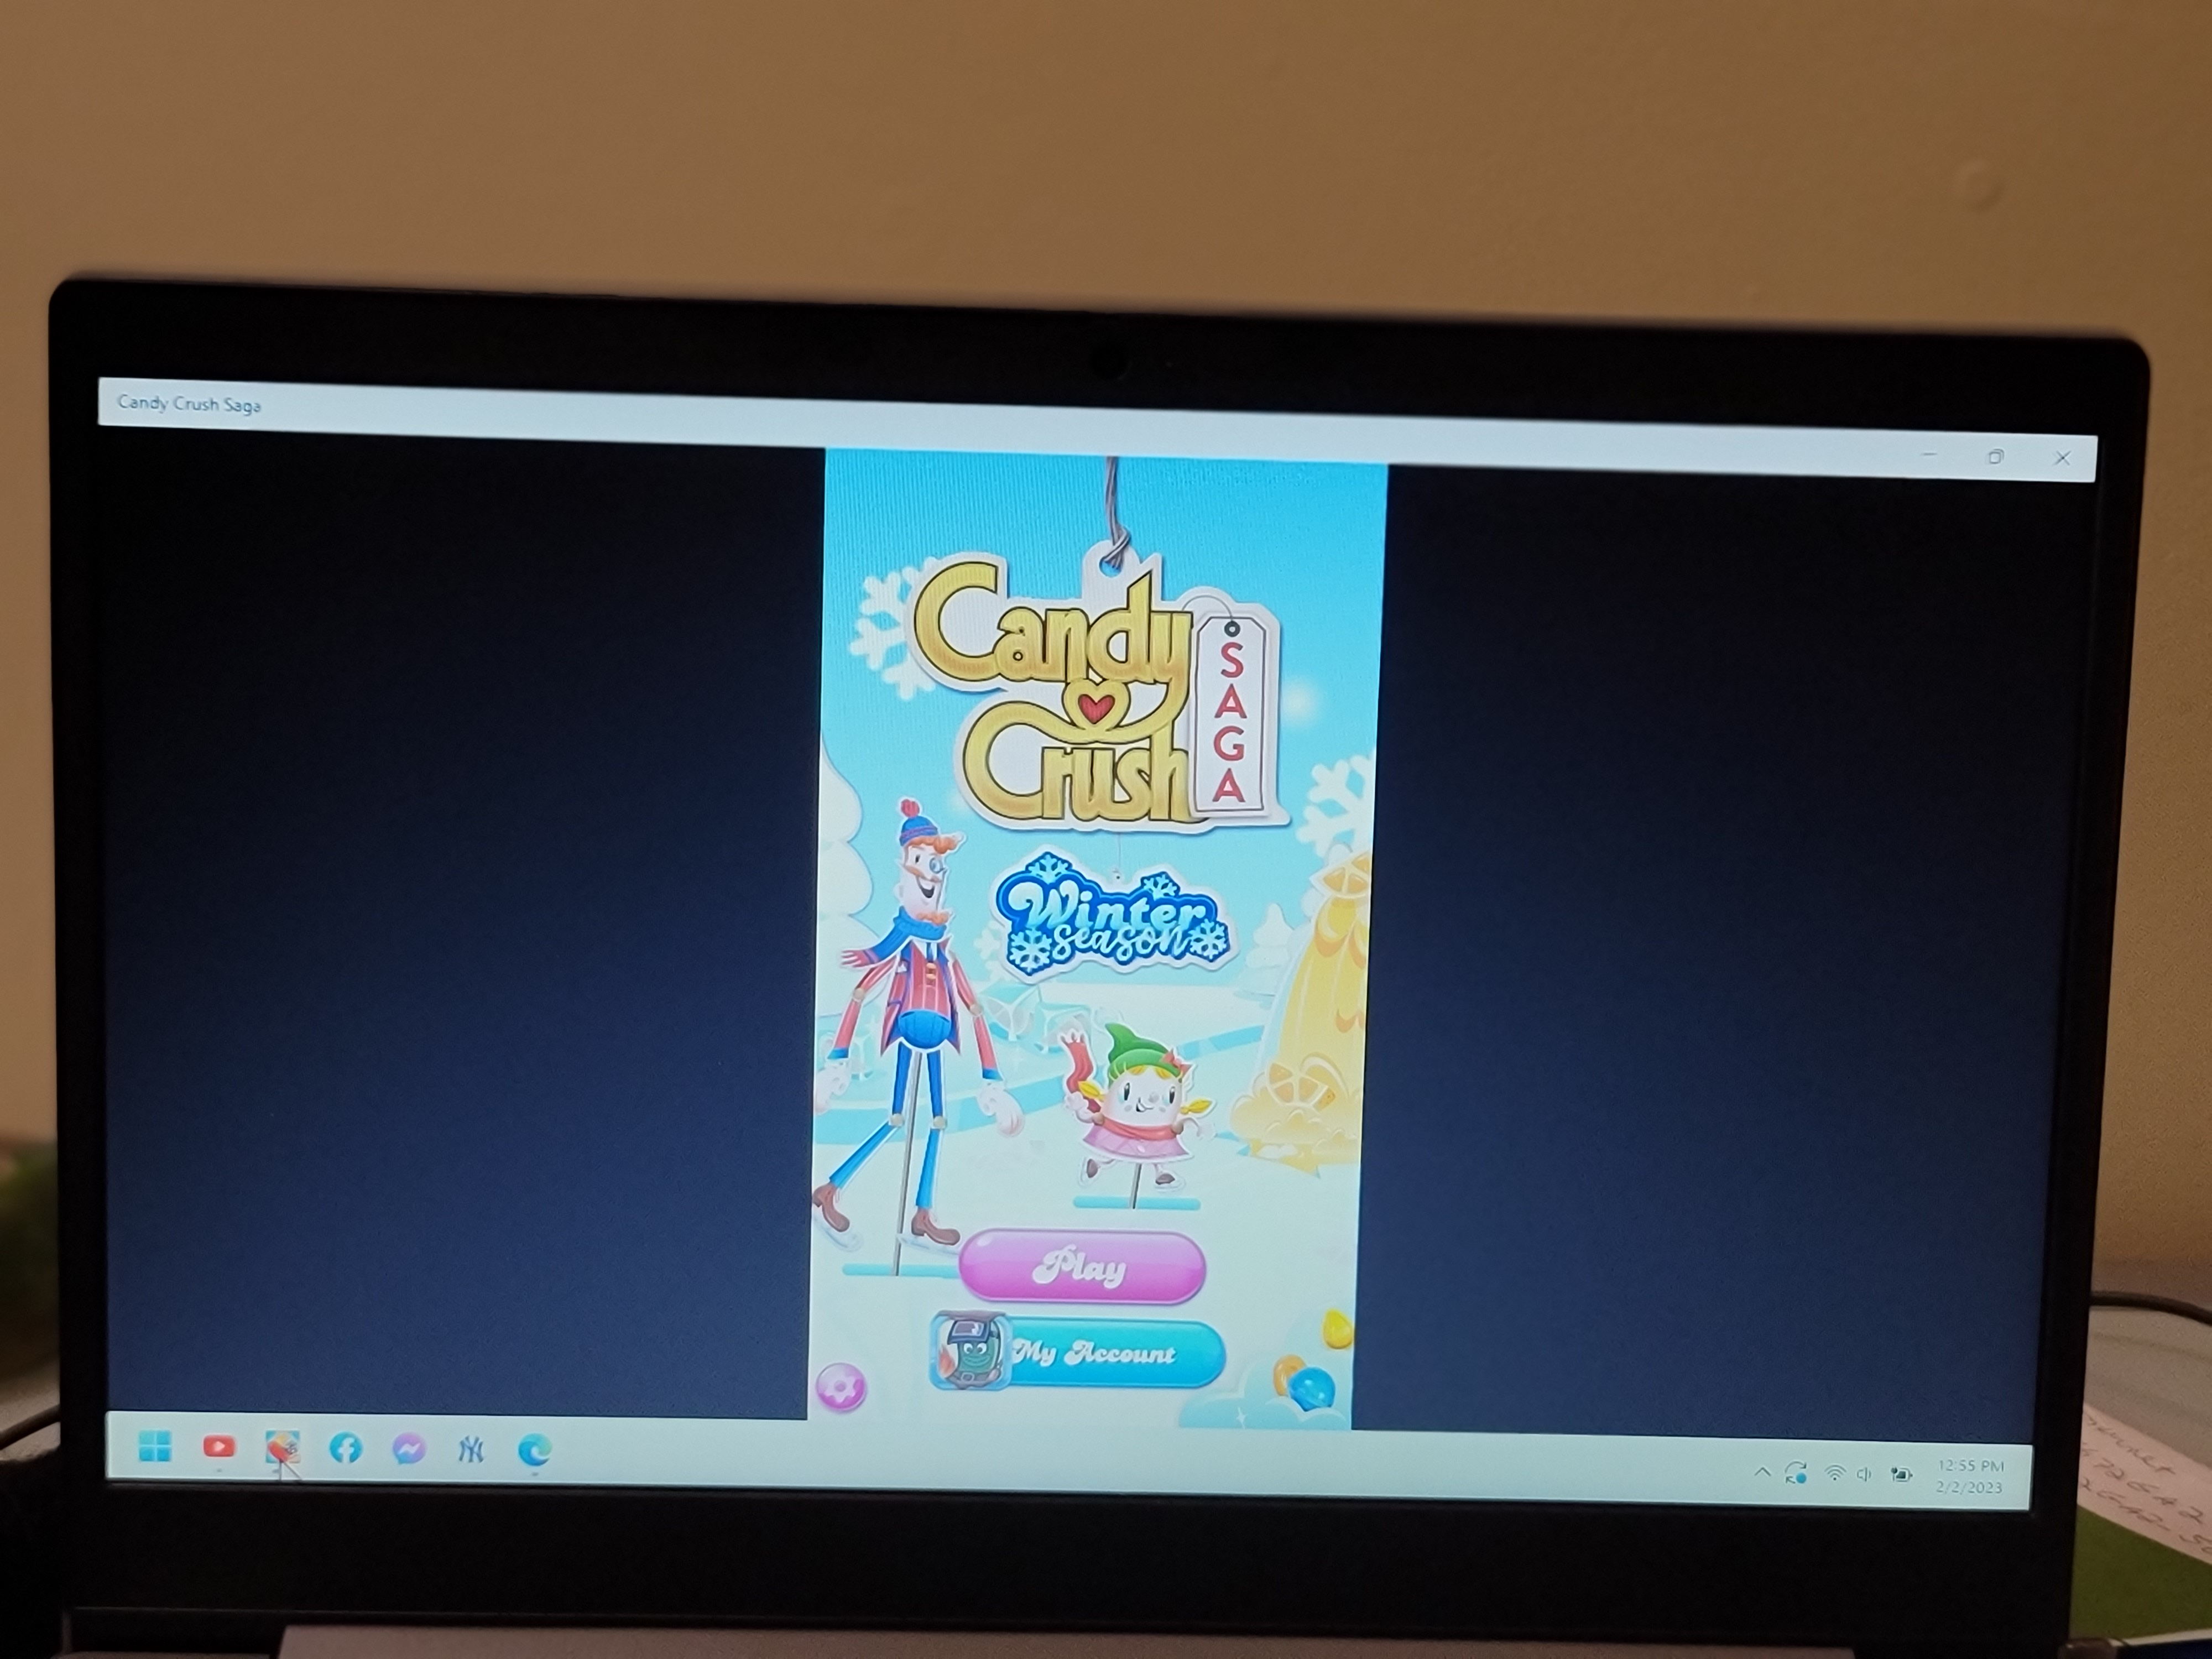 Candy Crush Saga - Game for Mac, Windows (PC), Linux - WebCatalog